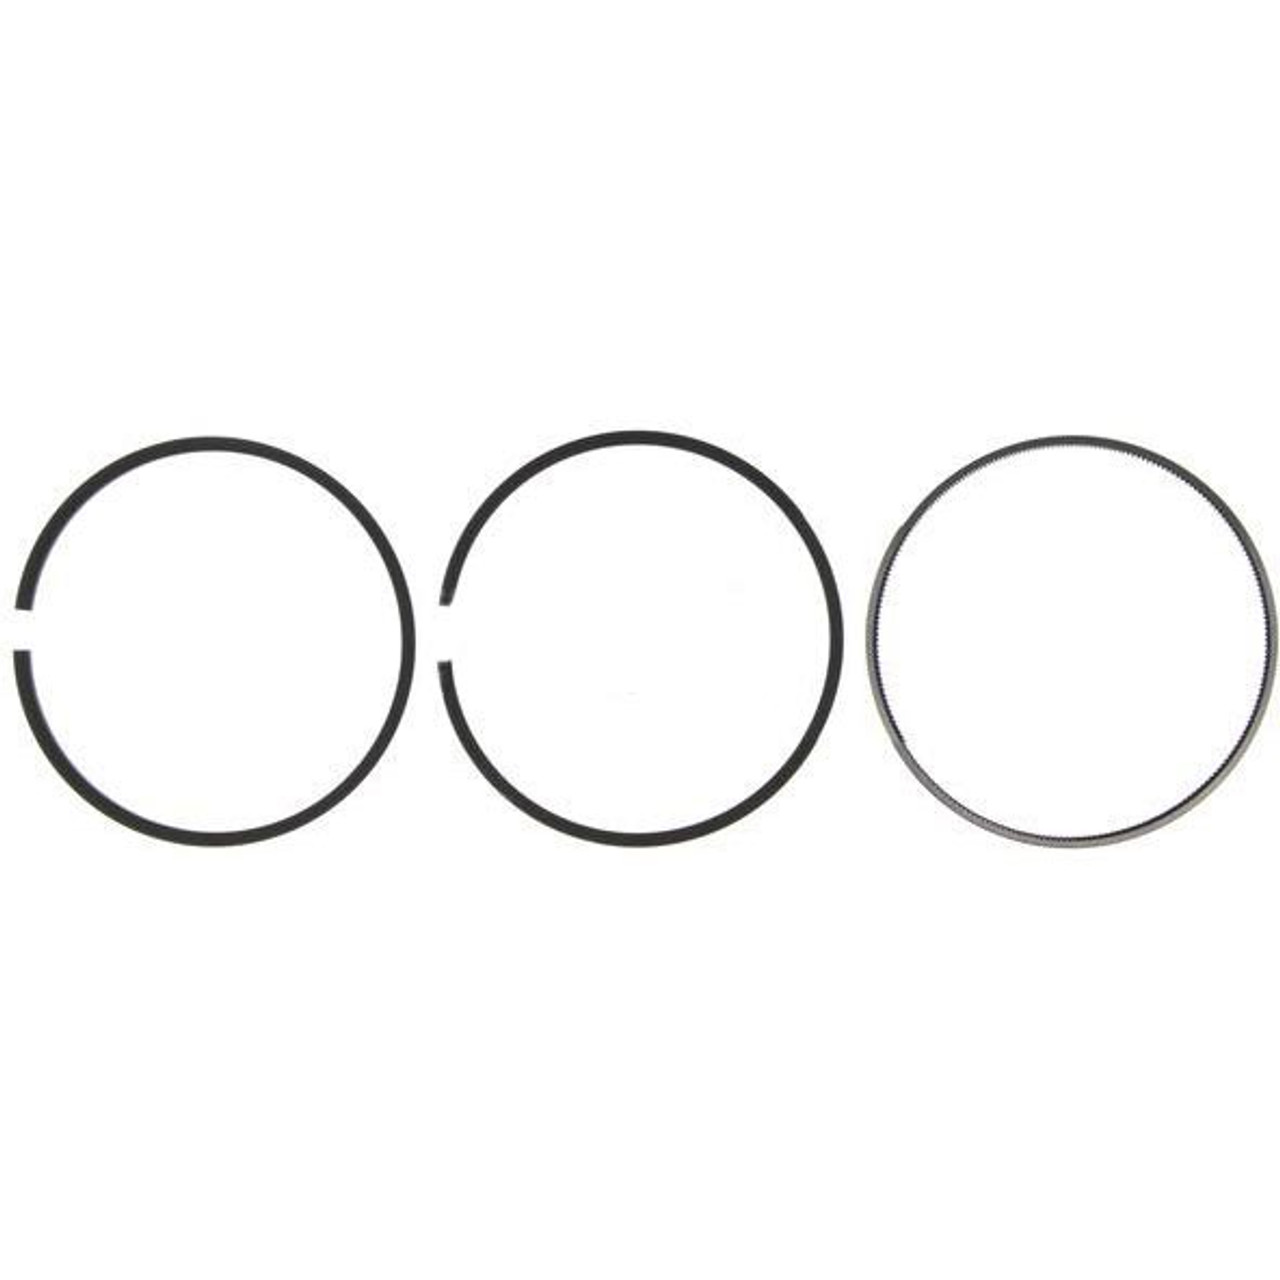 Mahle Piston Ring Set (.020) 2011 to 2017 6.7L Powerstroke (MCIS42168.020)-Main View